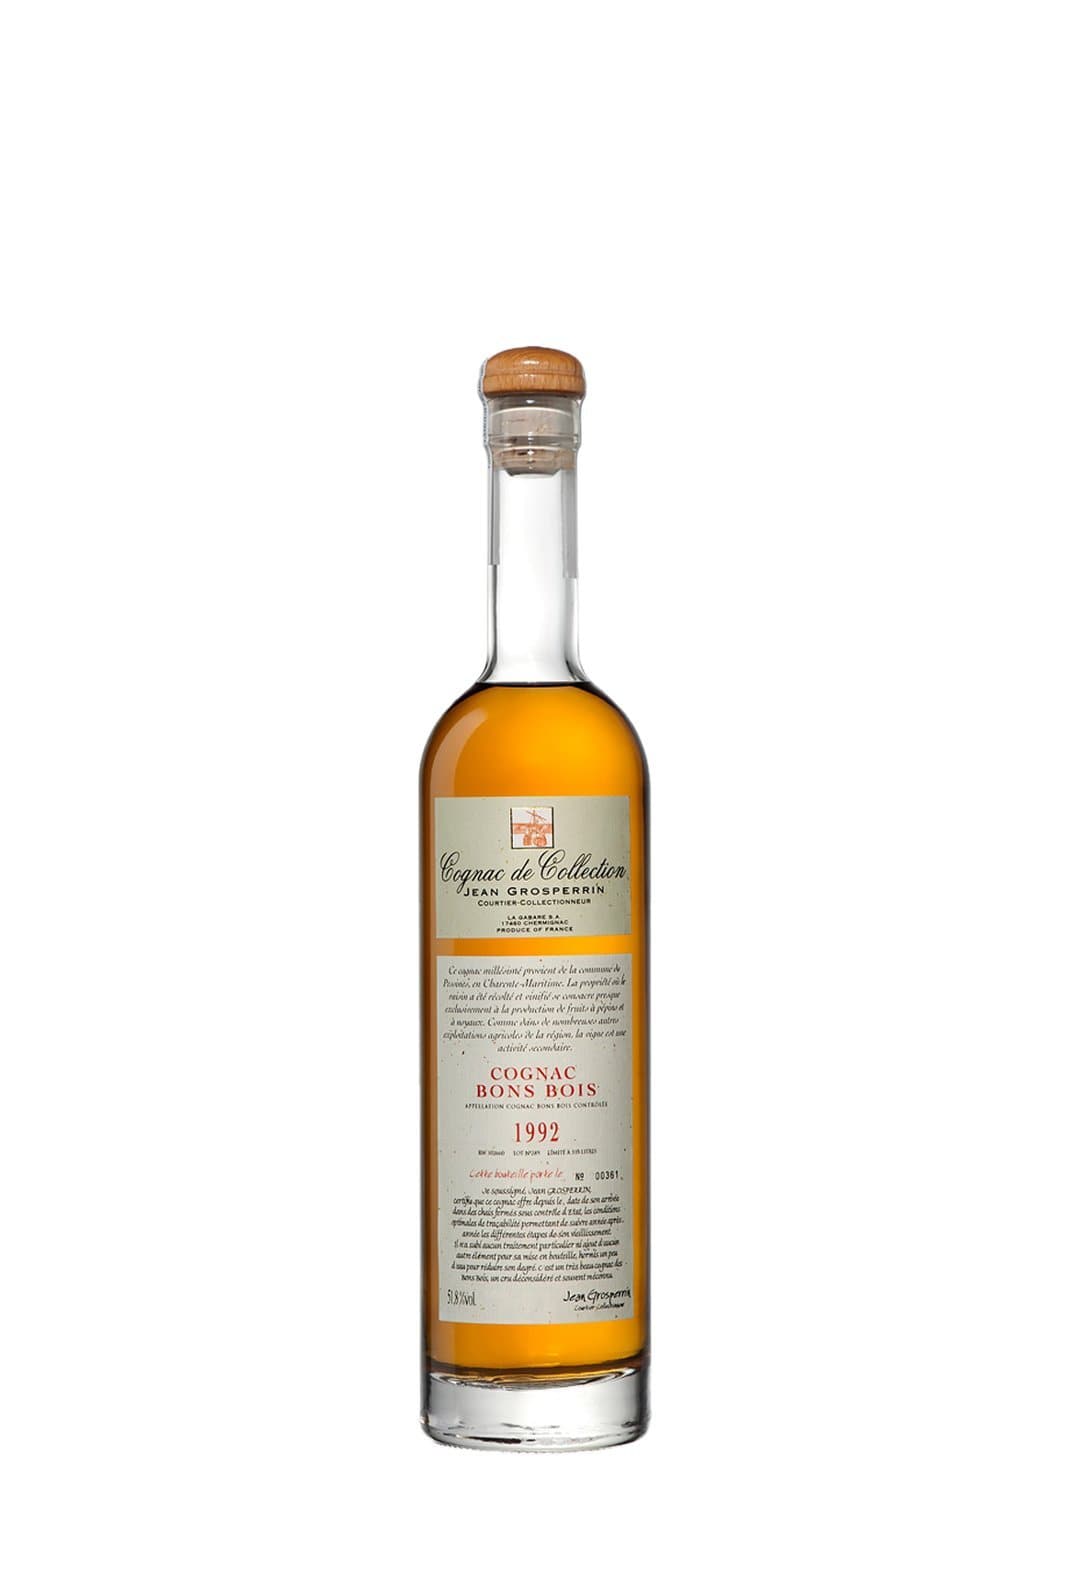 Grosperrin 1992 Bons Bois Cognac 51.5% 350ml | Brandy | Shop online at Spirits of France